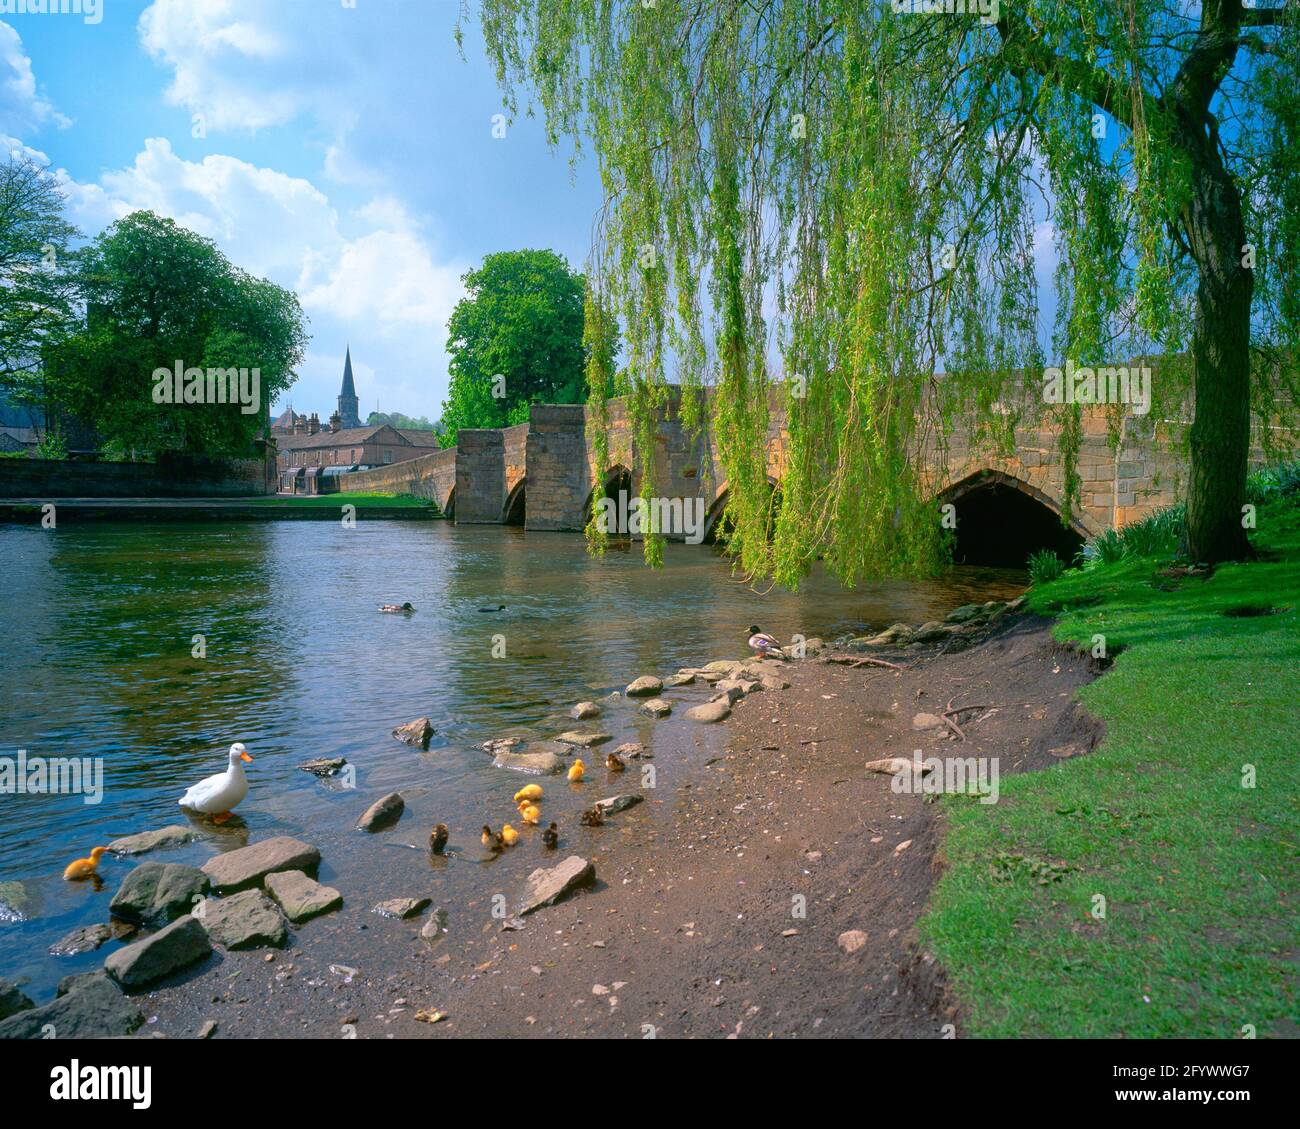 UK, England, Derbyshire, Bakewell, river Derwent and bridge, spring with ducks Stock Photo